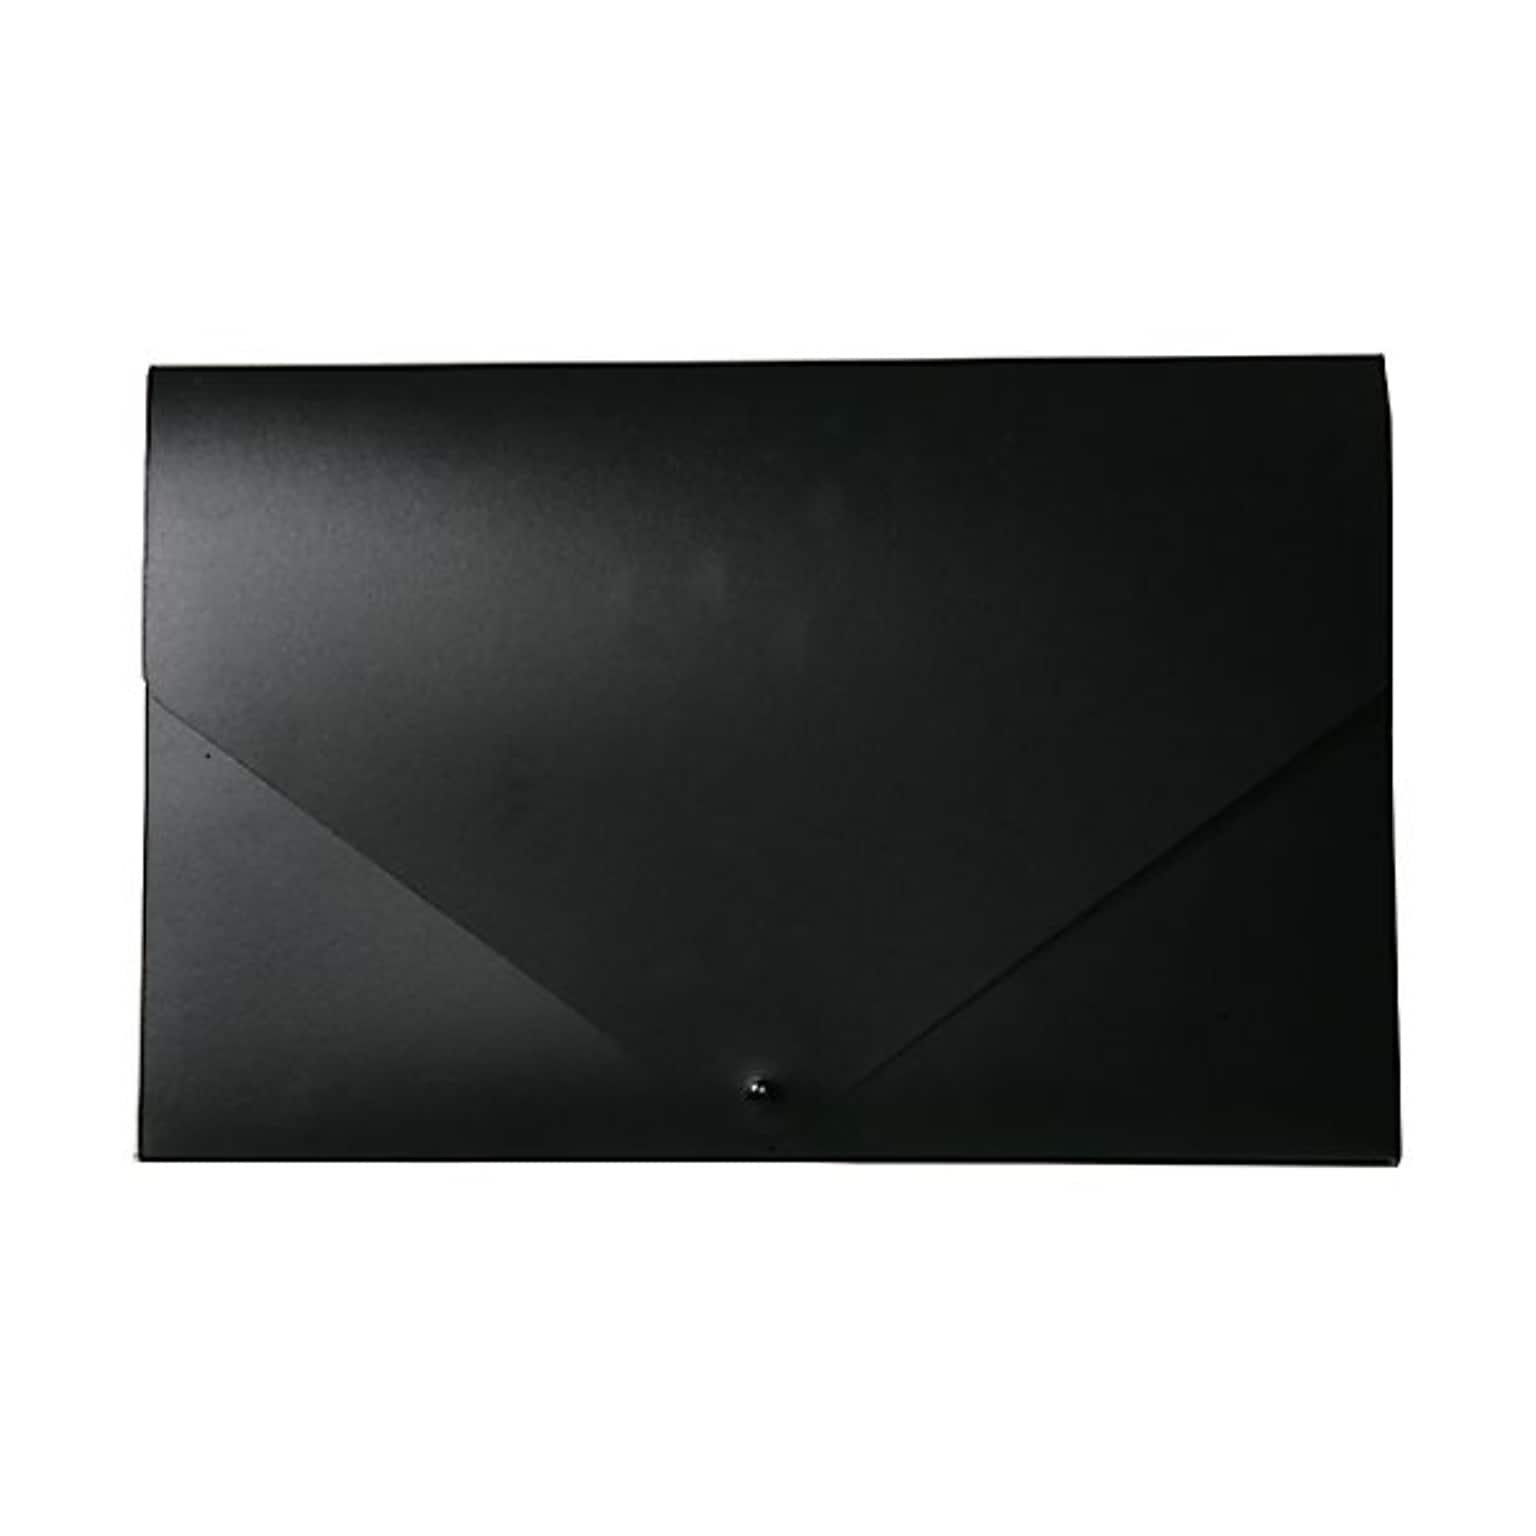 JAM Paper Plastic Portfolio with Snap Closure, Large, 11 x 17 x 3/4, Black, Sold Individually (2254027)